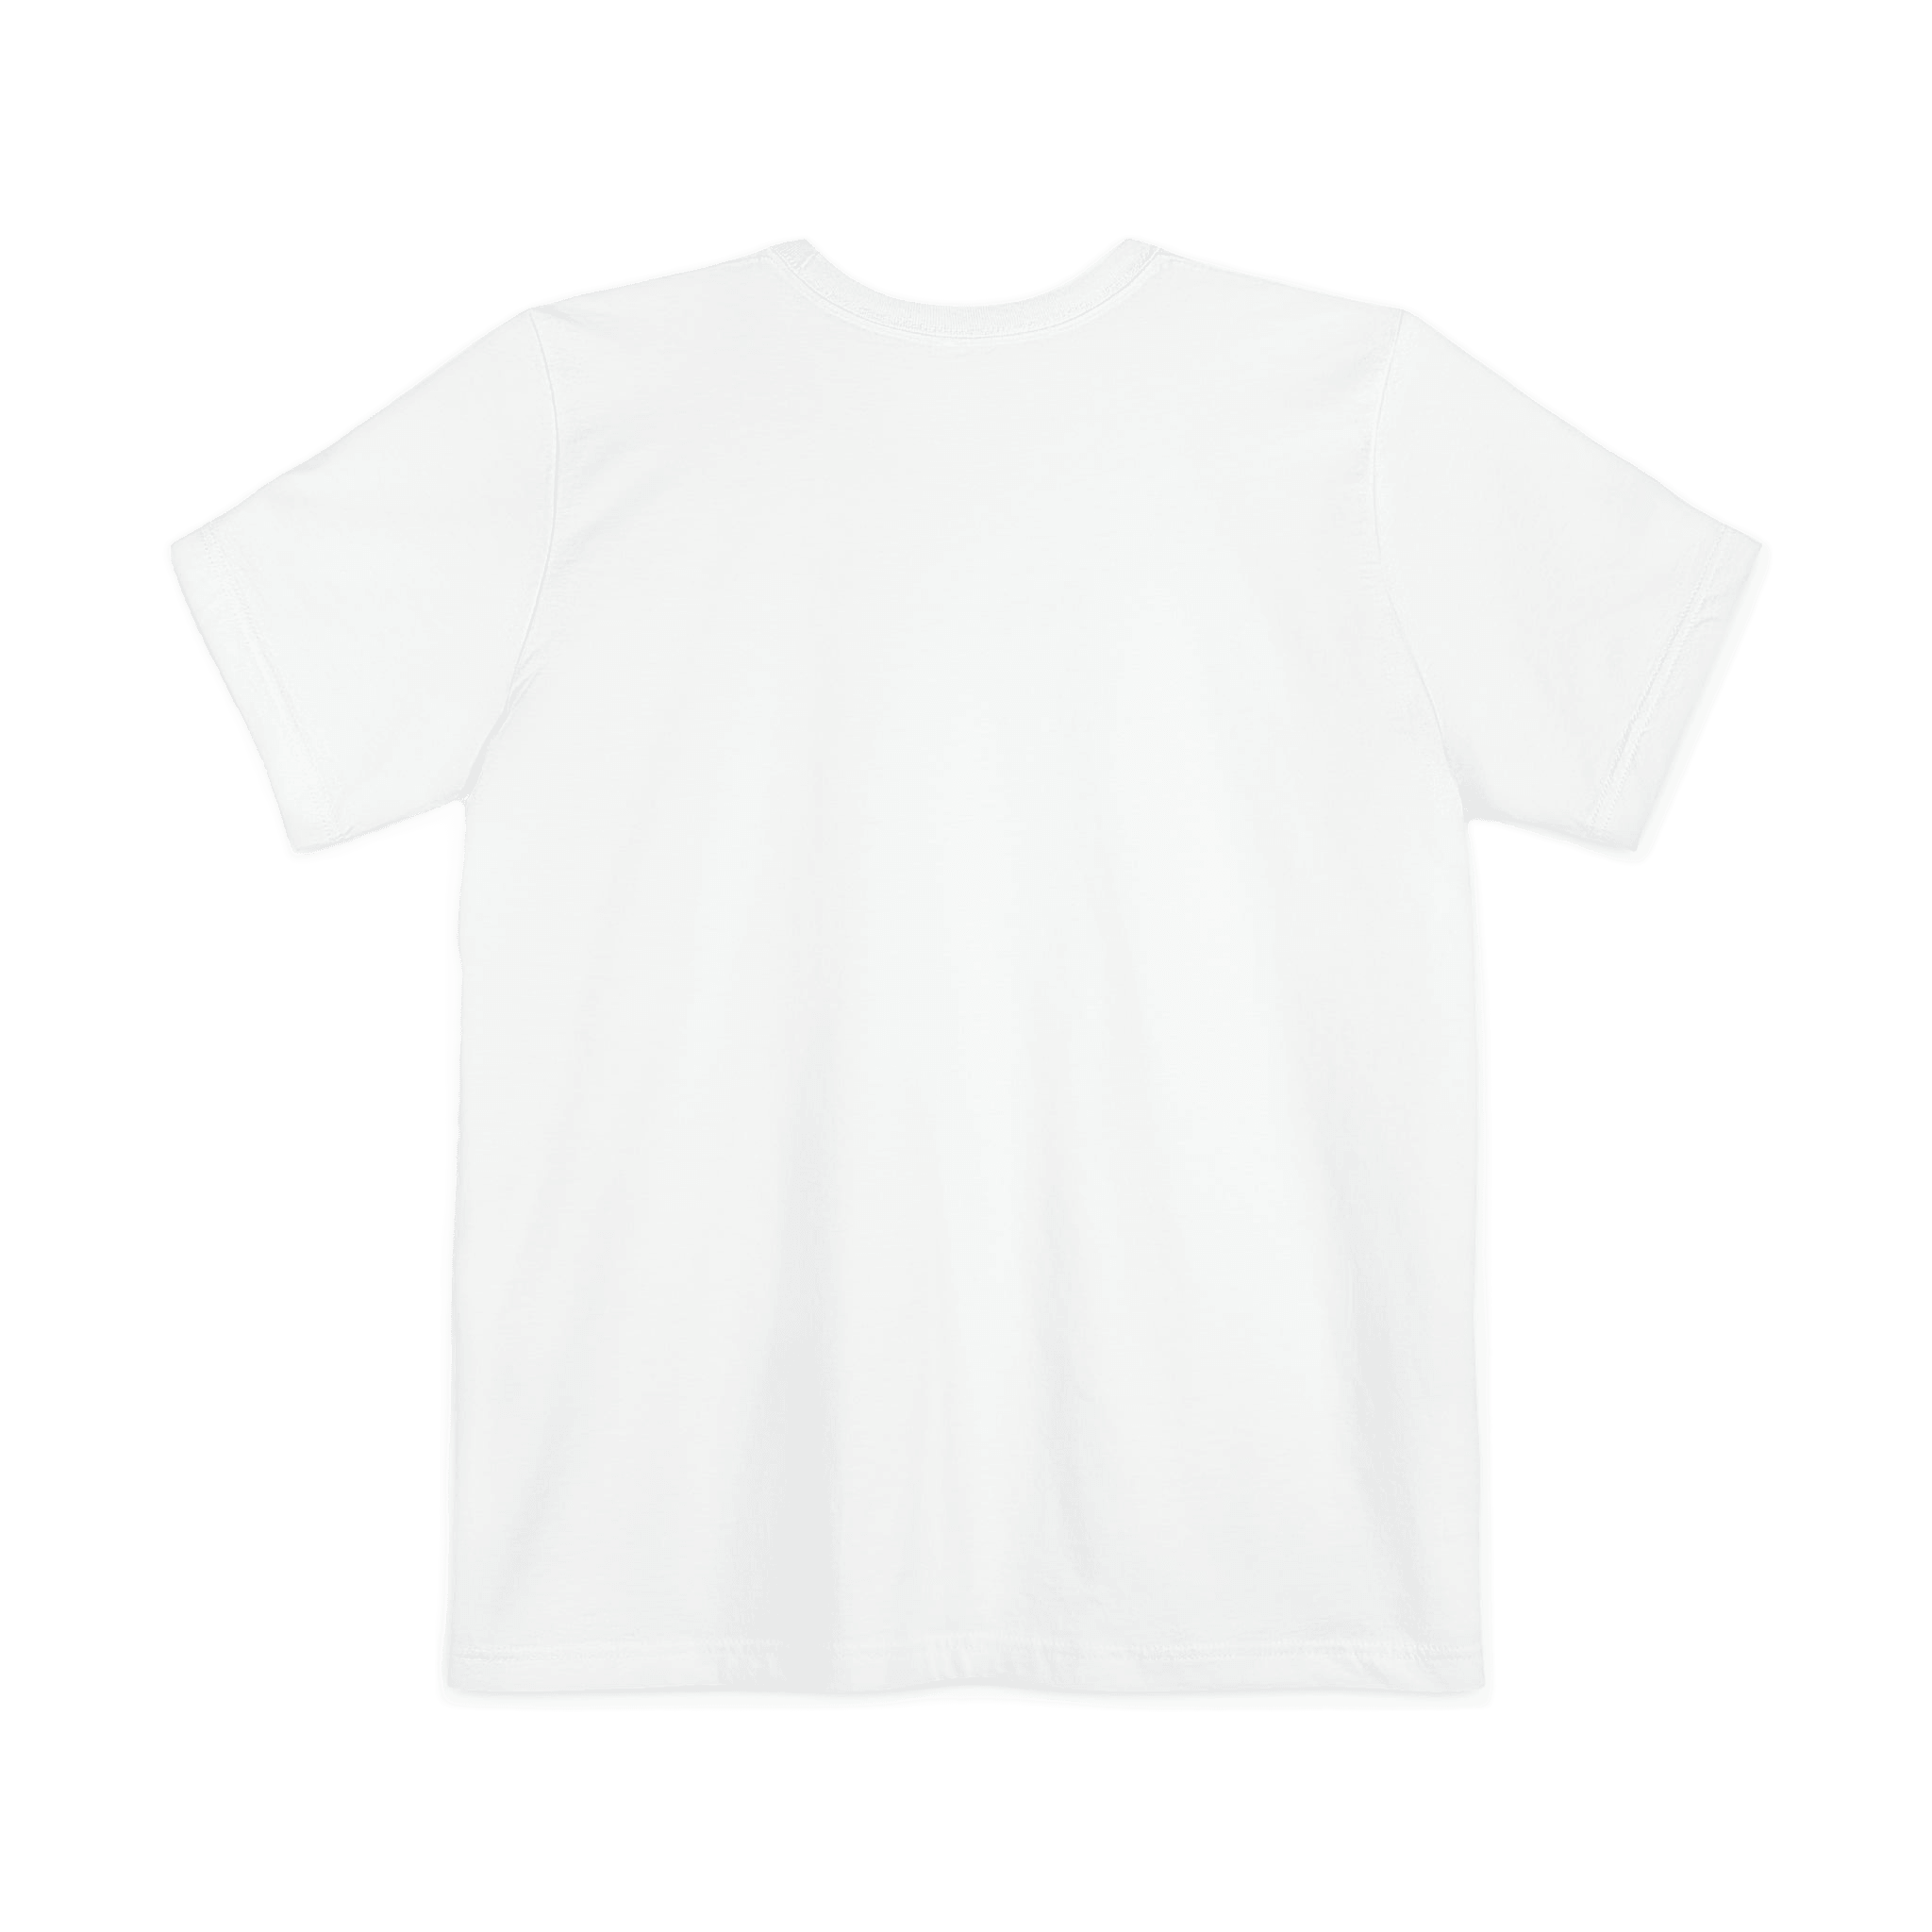 Hot Mix Pocket T-shirt